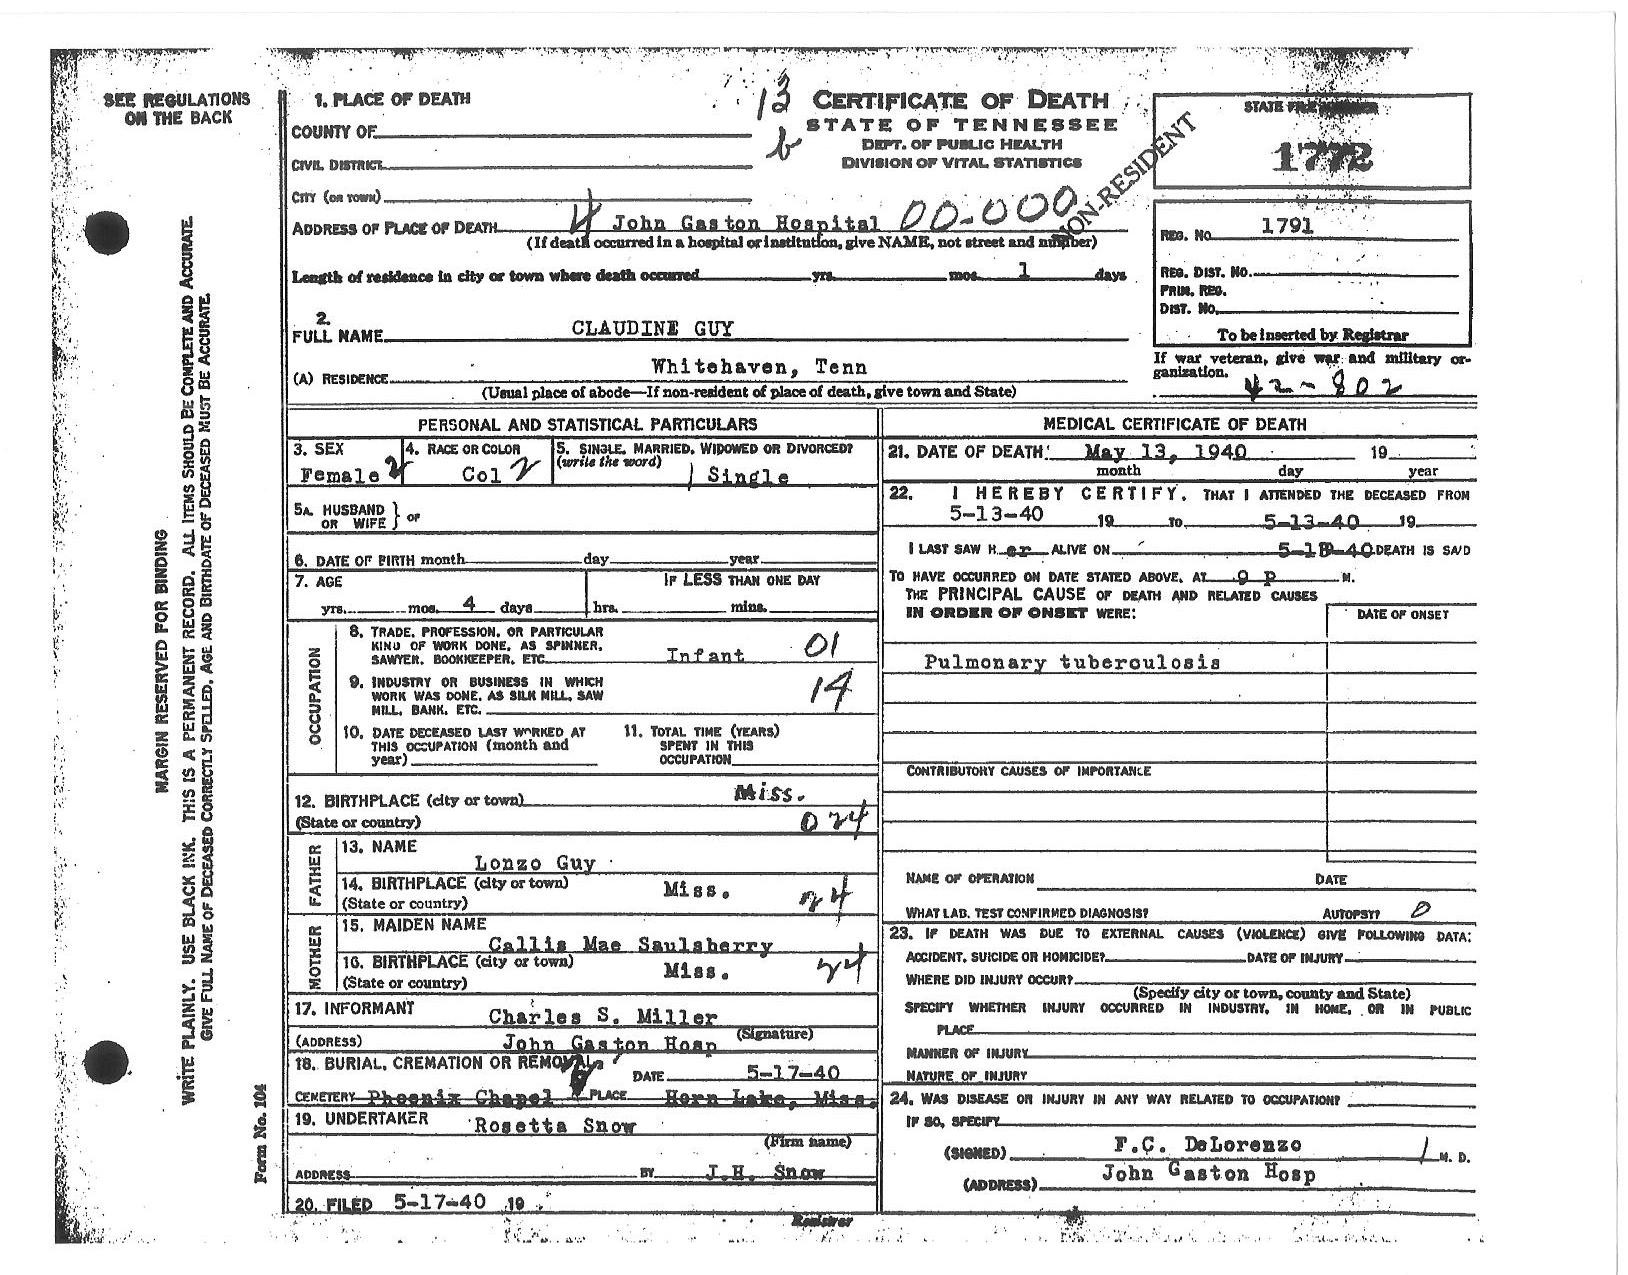 Claudine Guy's Death Certificate